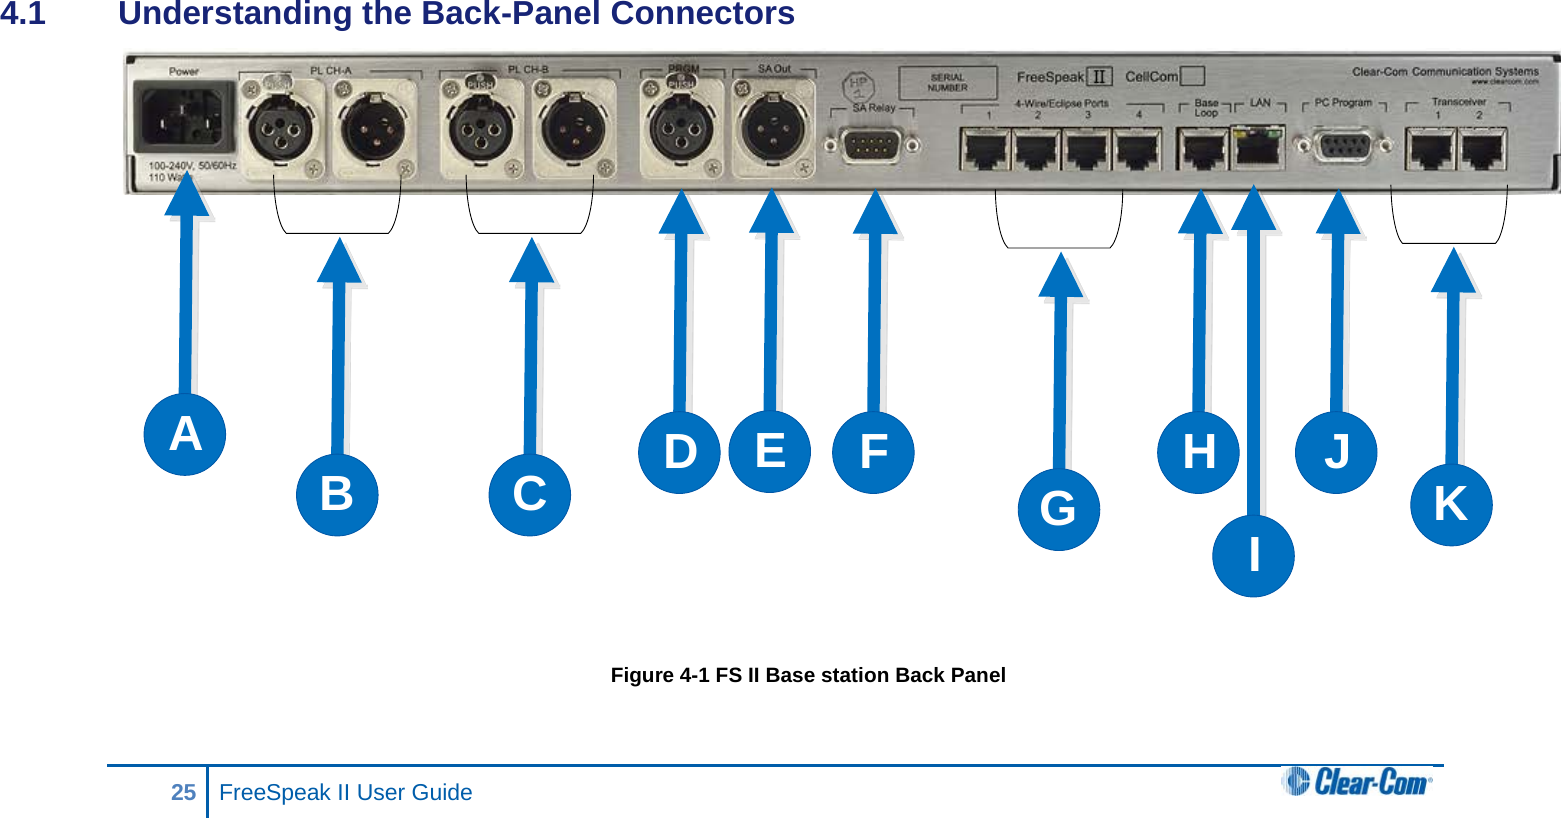   4.1  Understanding the Back-Panel Connectors    Figure 4-1 FS II Base station Back Panel ABCDEFGHIJK25 FreeSpeak II User Guide    